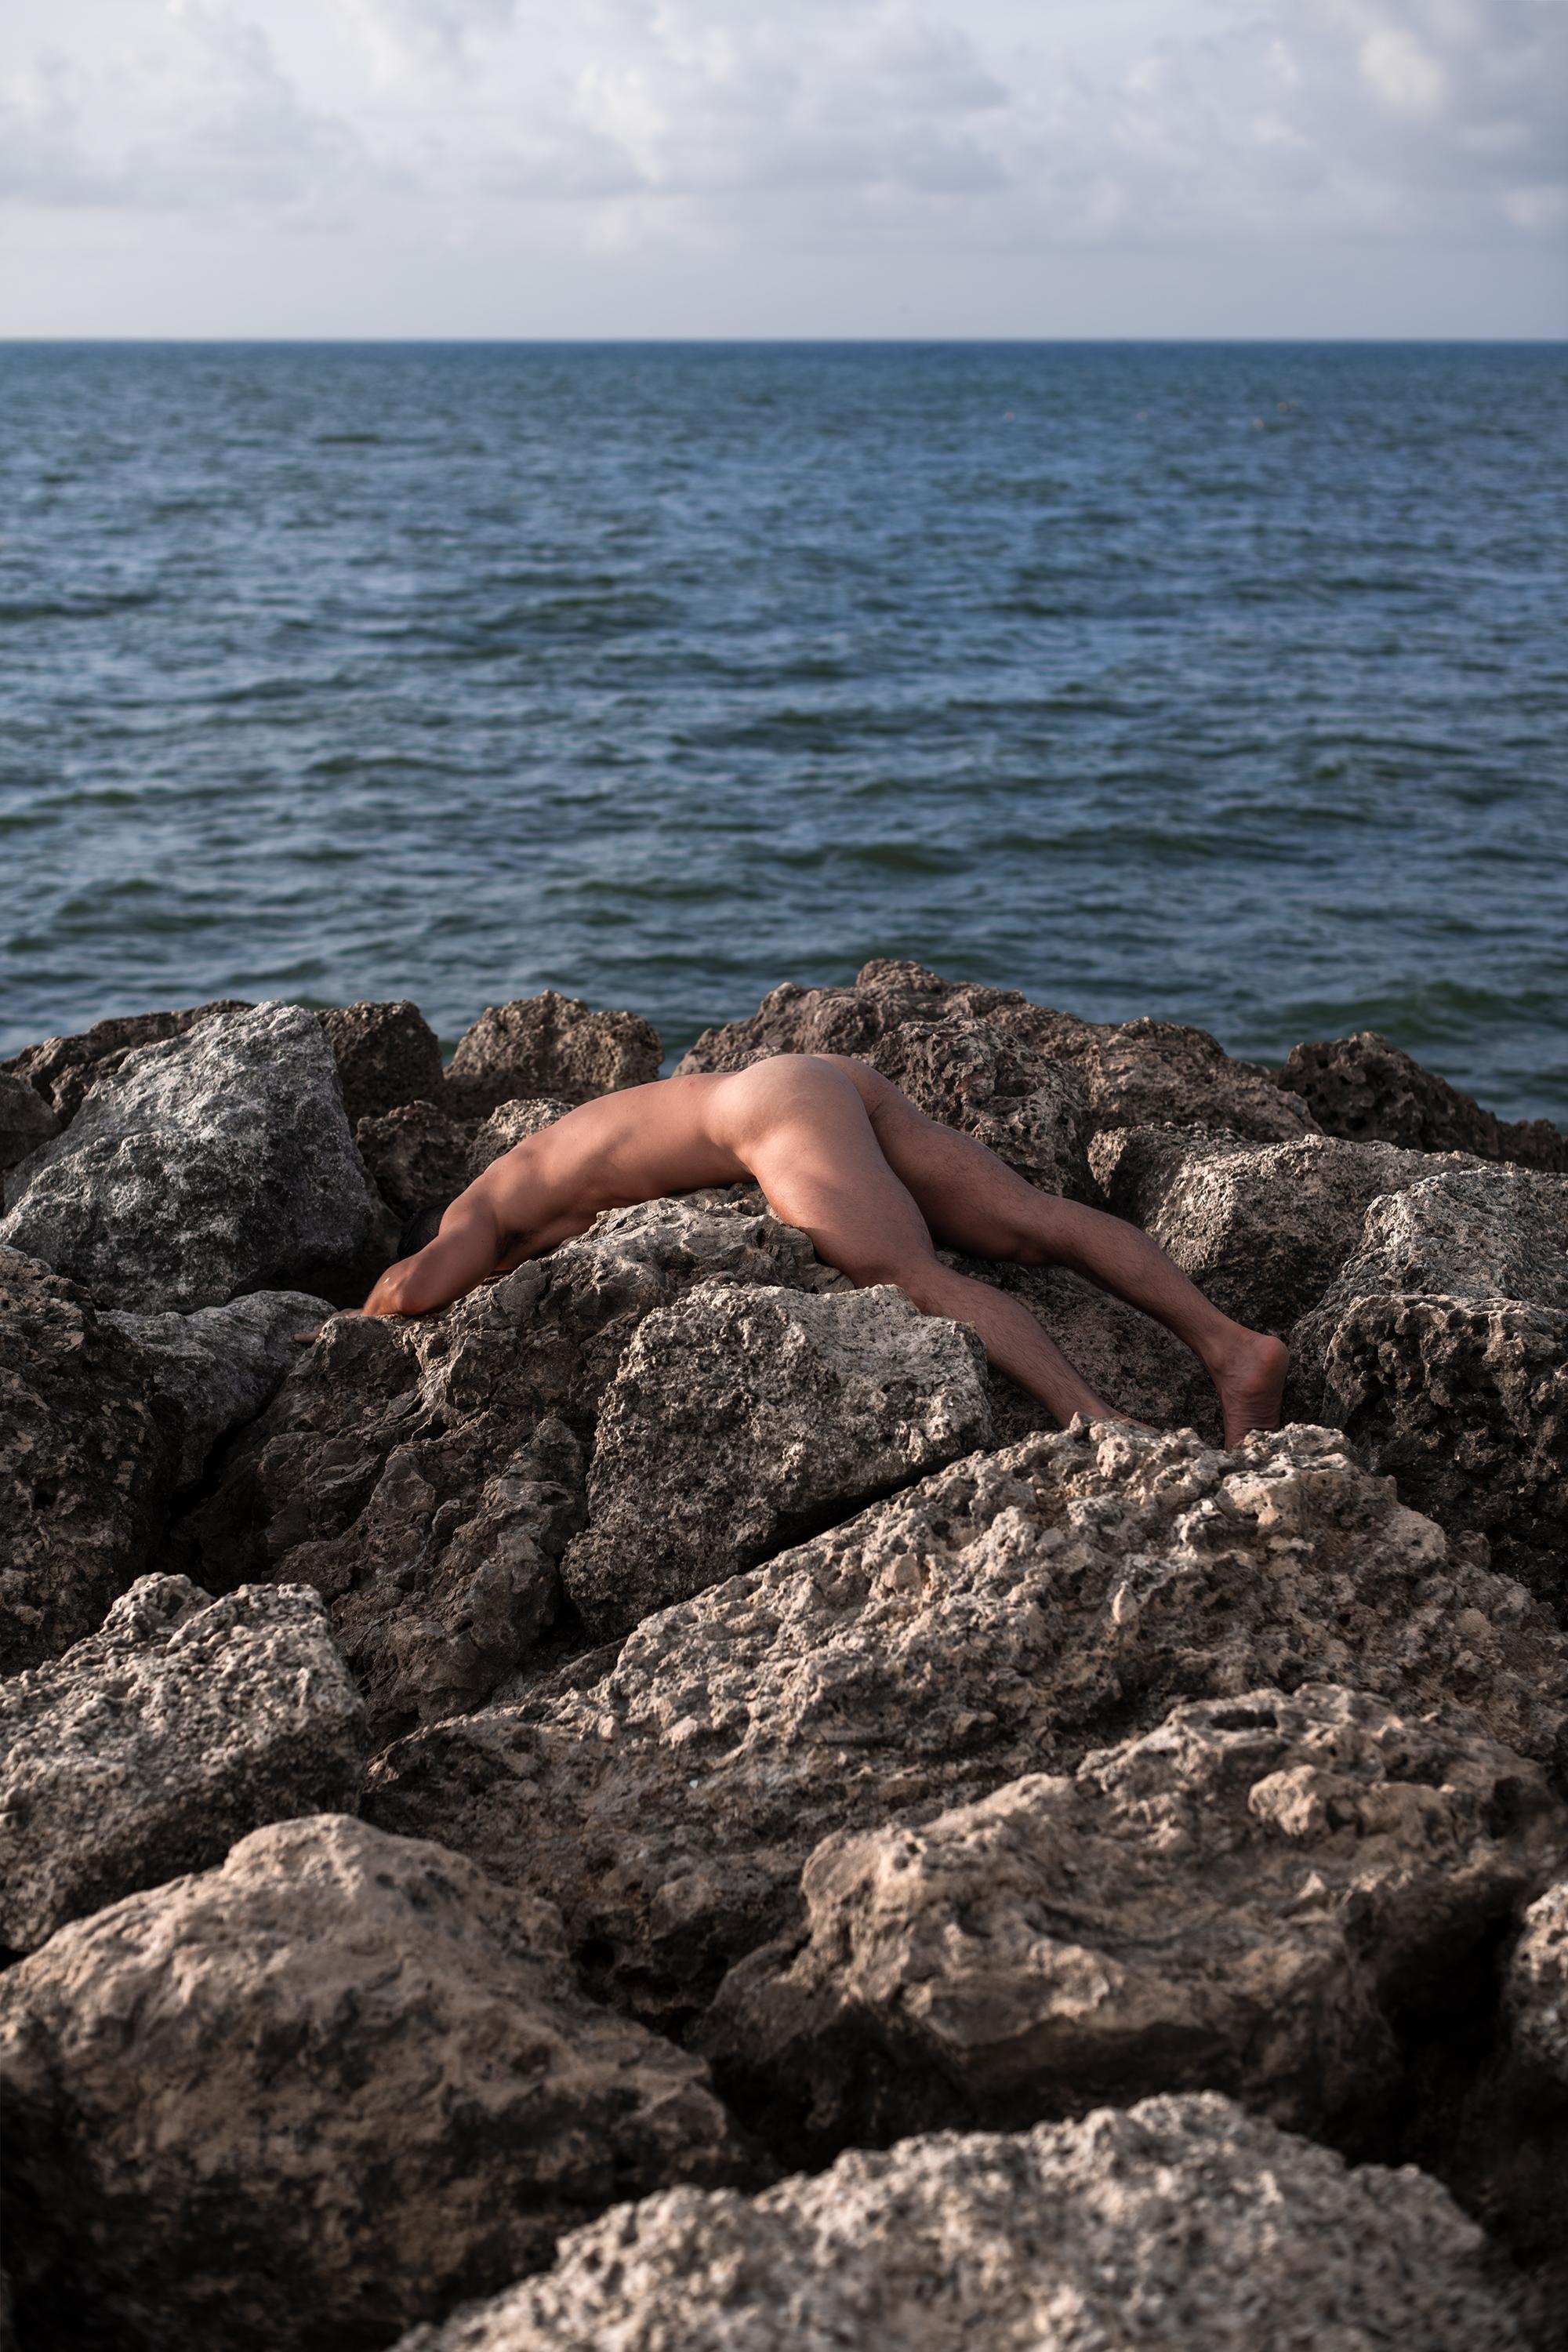 Javier Rey Color Photograph - Engulfment - Cartagena 2. From the series Engulfment. Color Nude Photograph